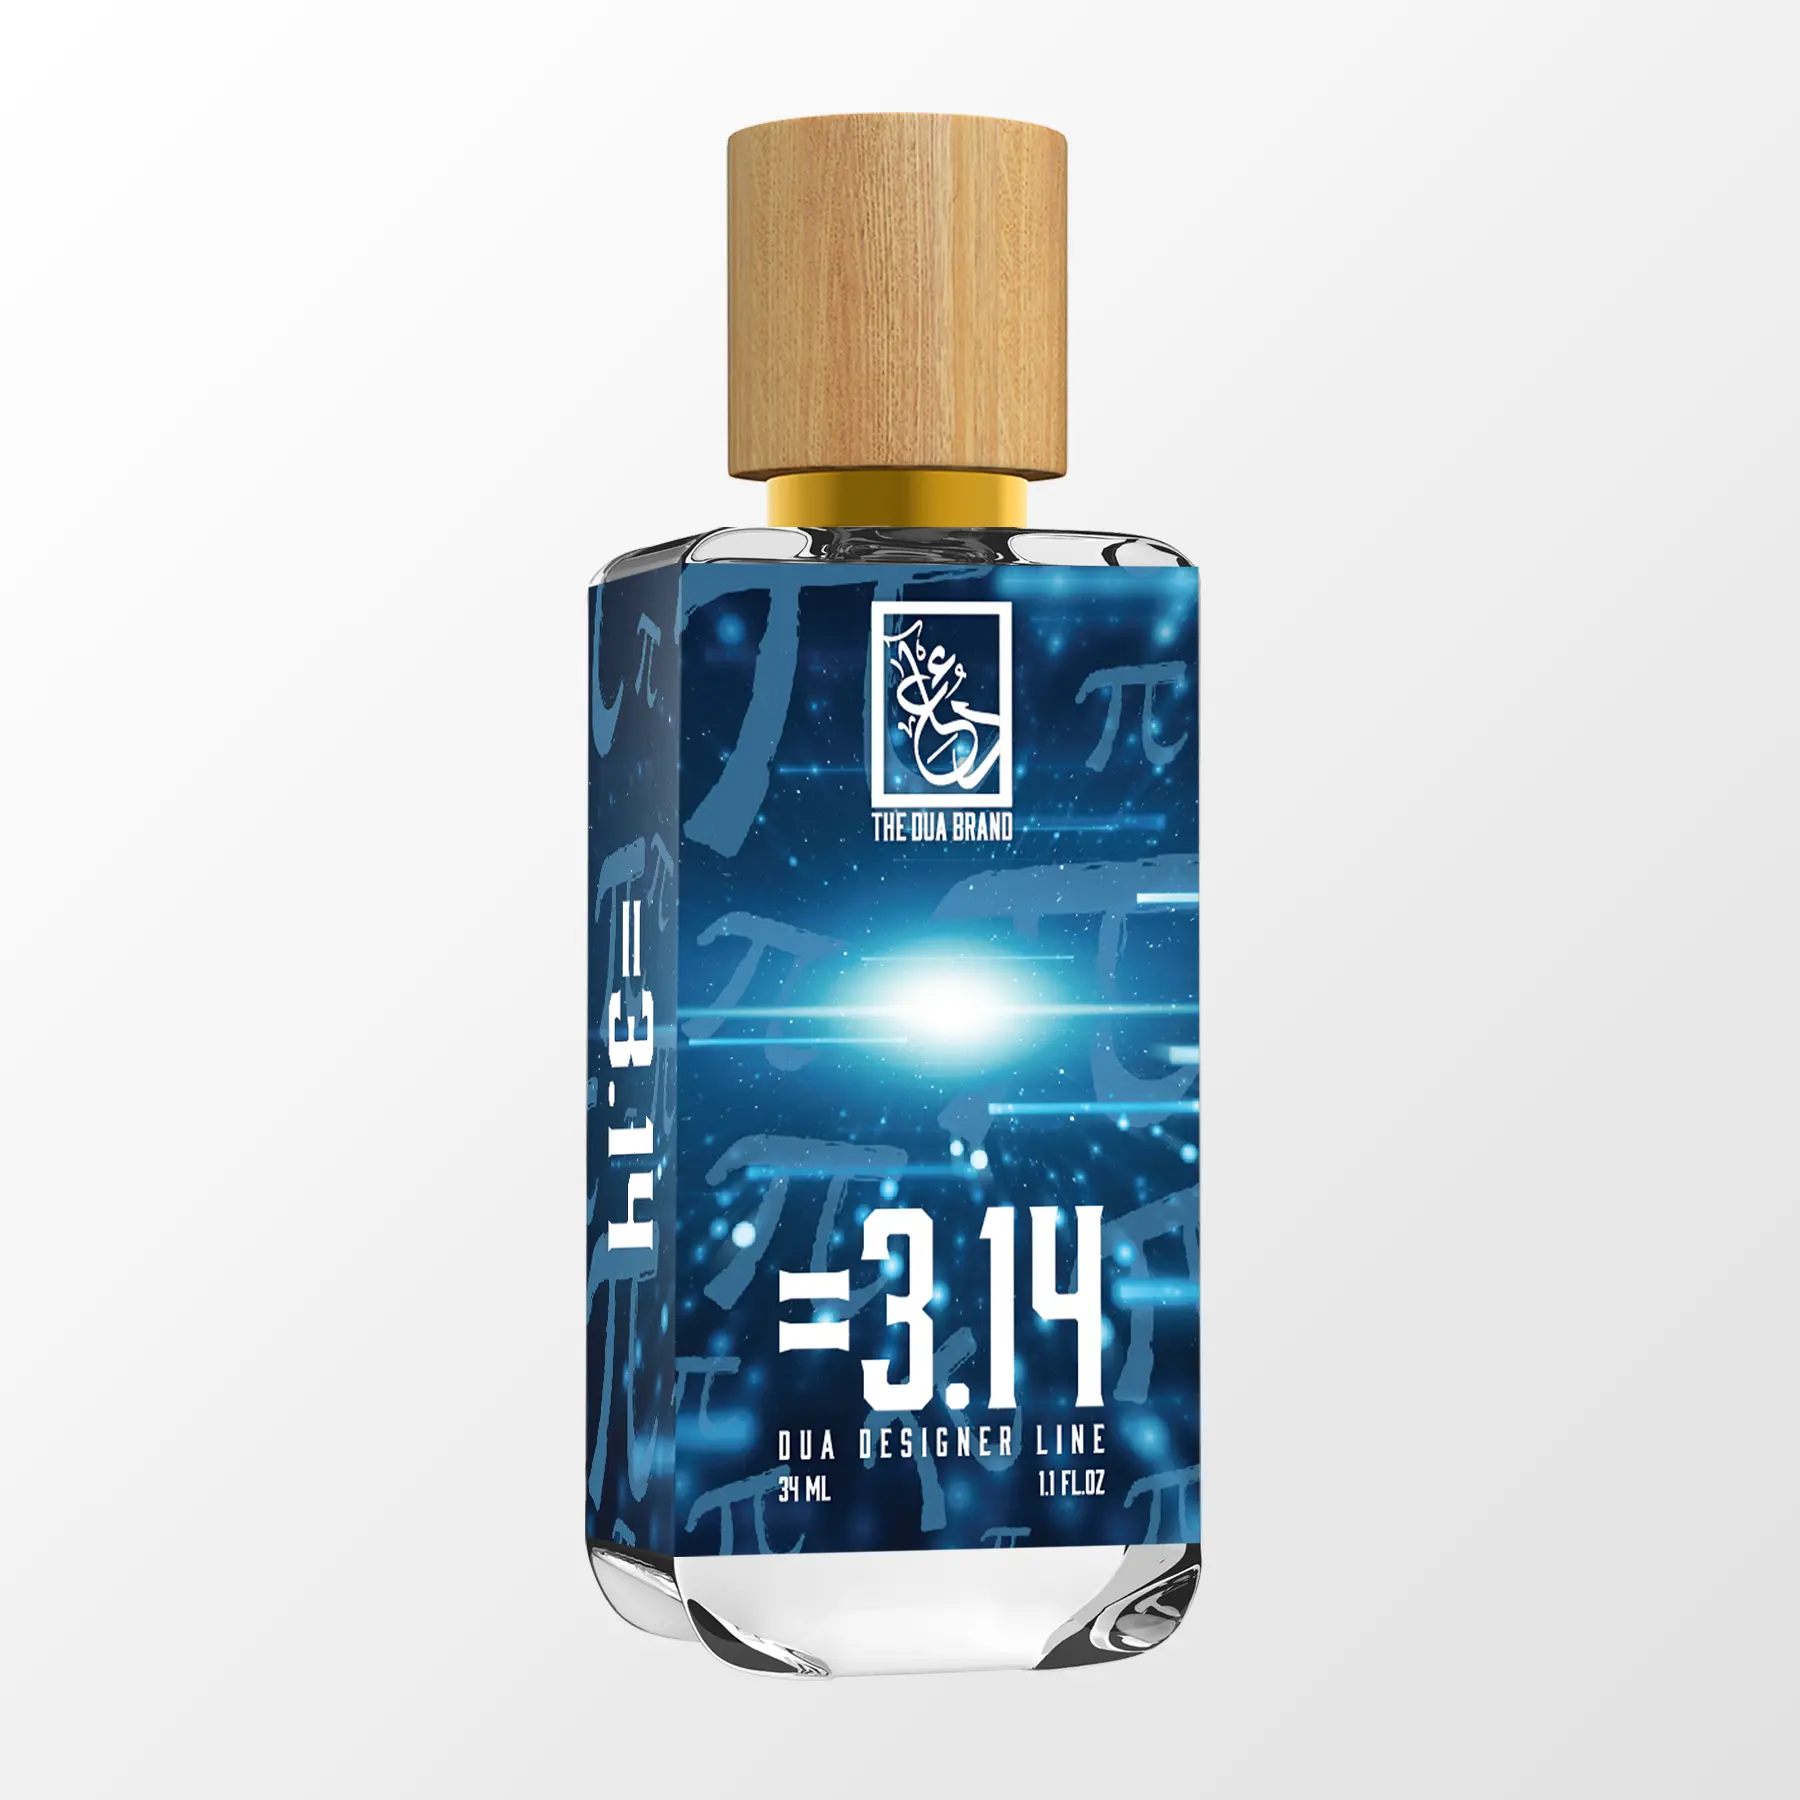 #mega - Dua Fragrances - Inspired by Megamare Orto Parisi - Unisex Perfume - 34ml/1.1 fl oz - Extrait de Parfum